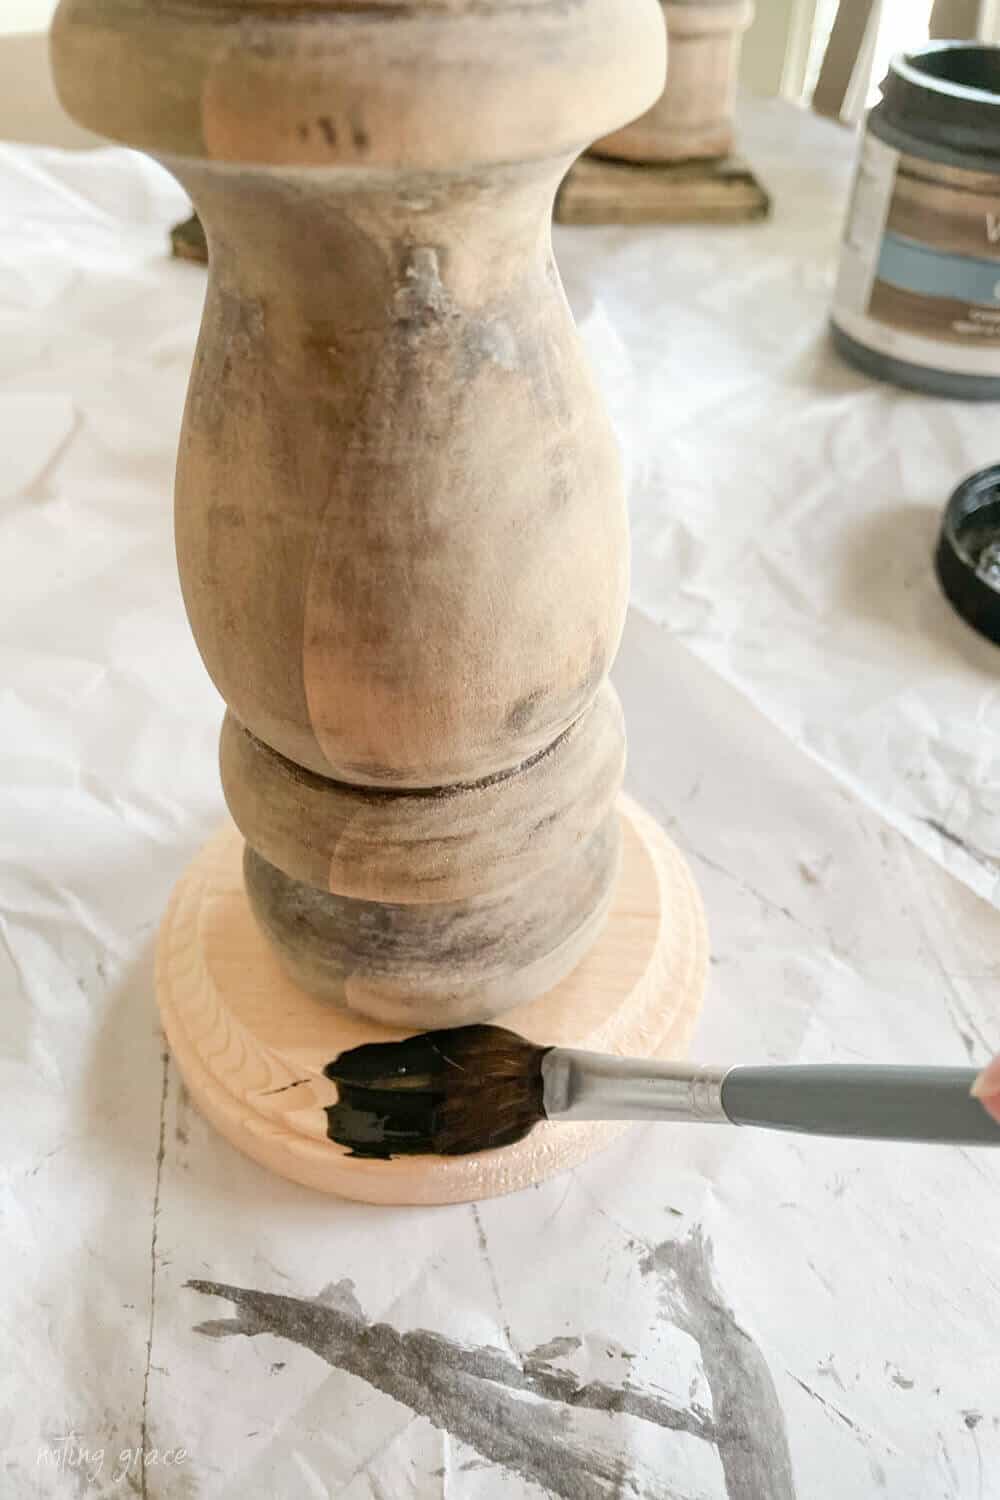 Adding antique glaze to new wood